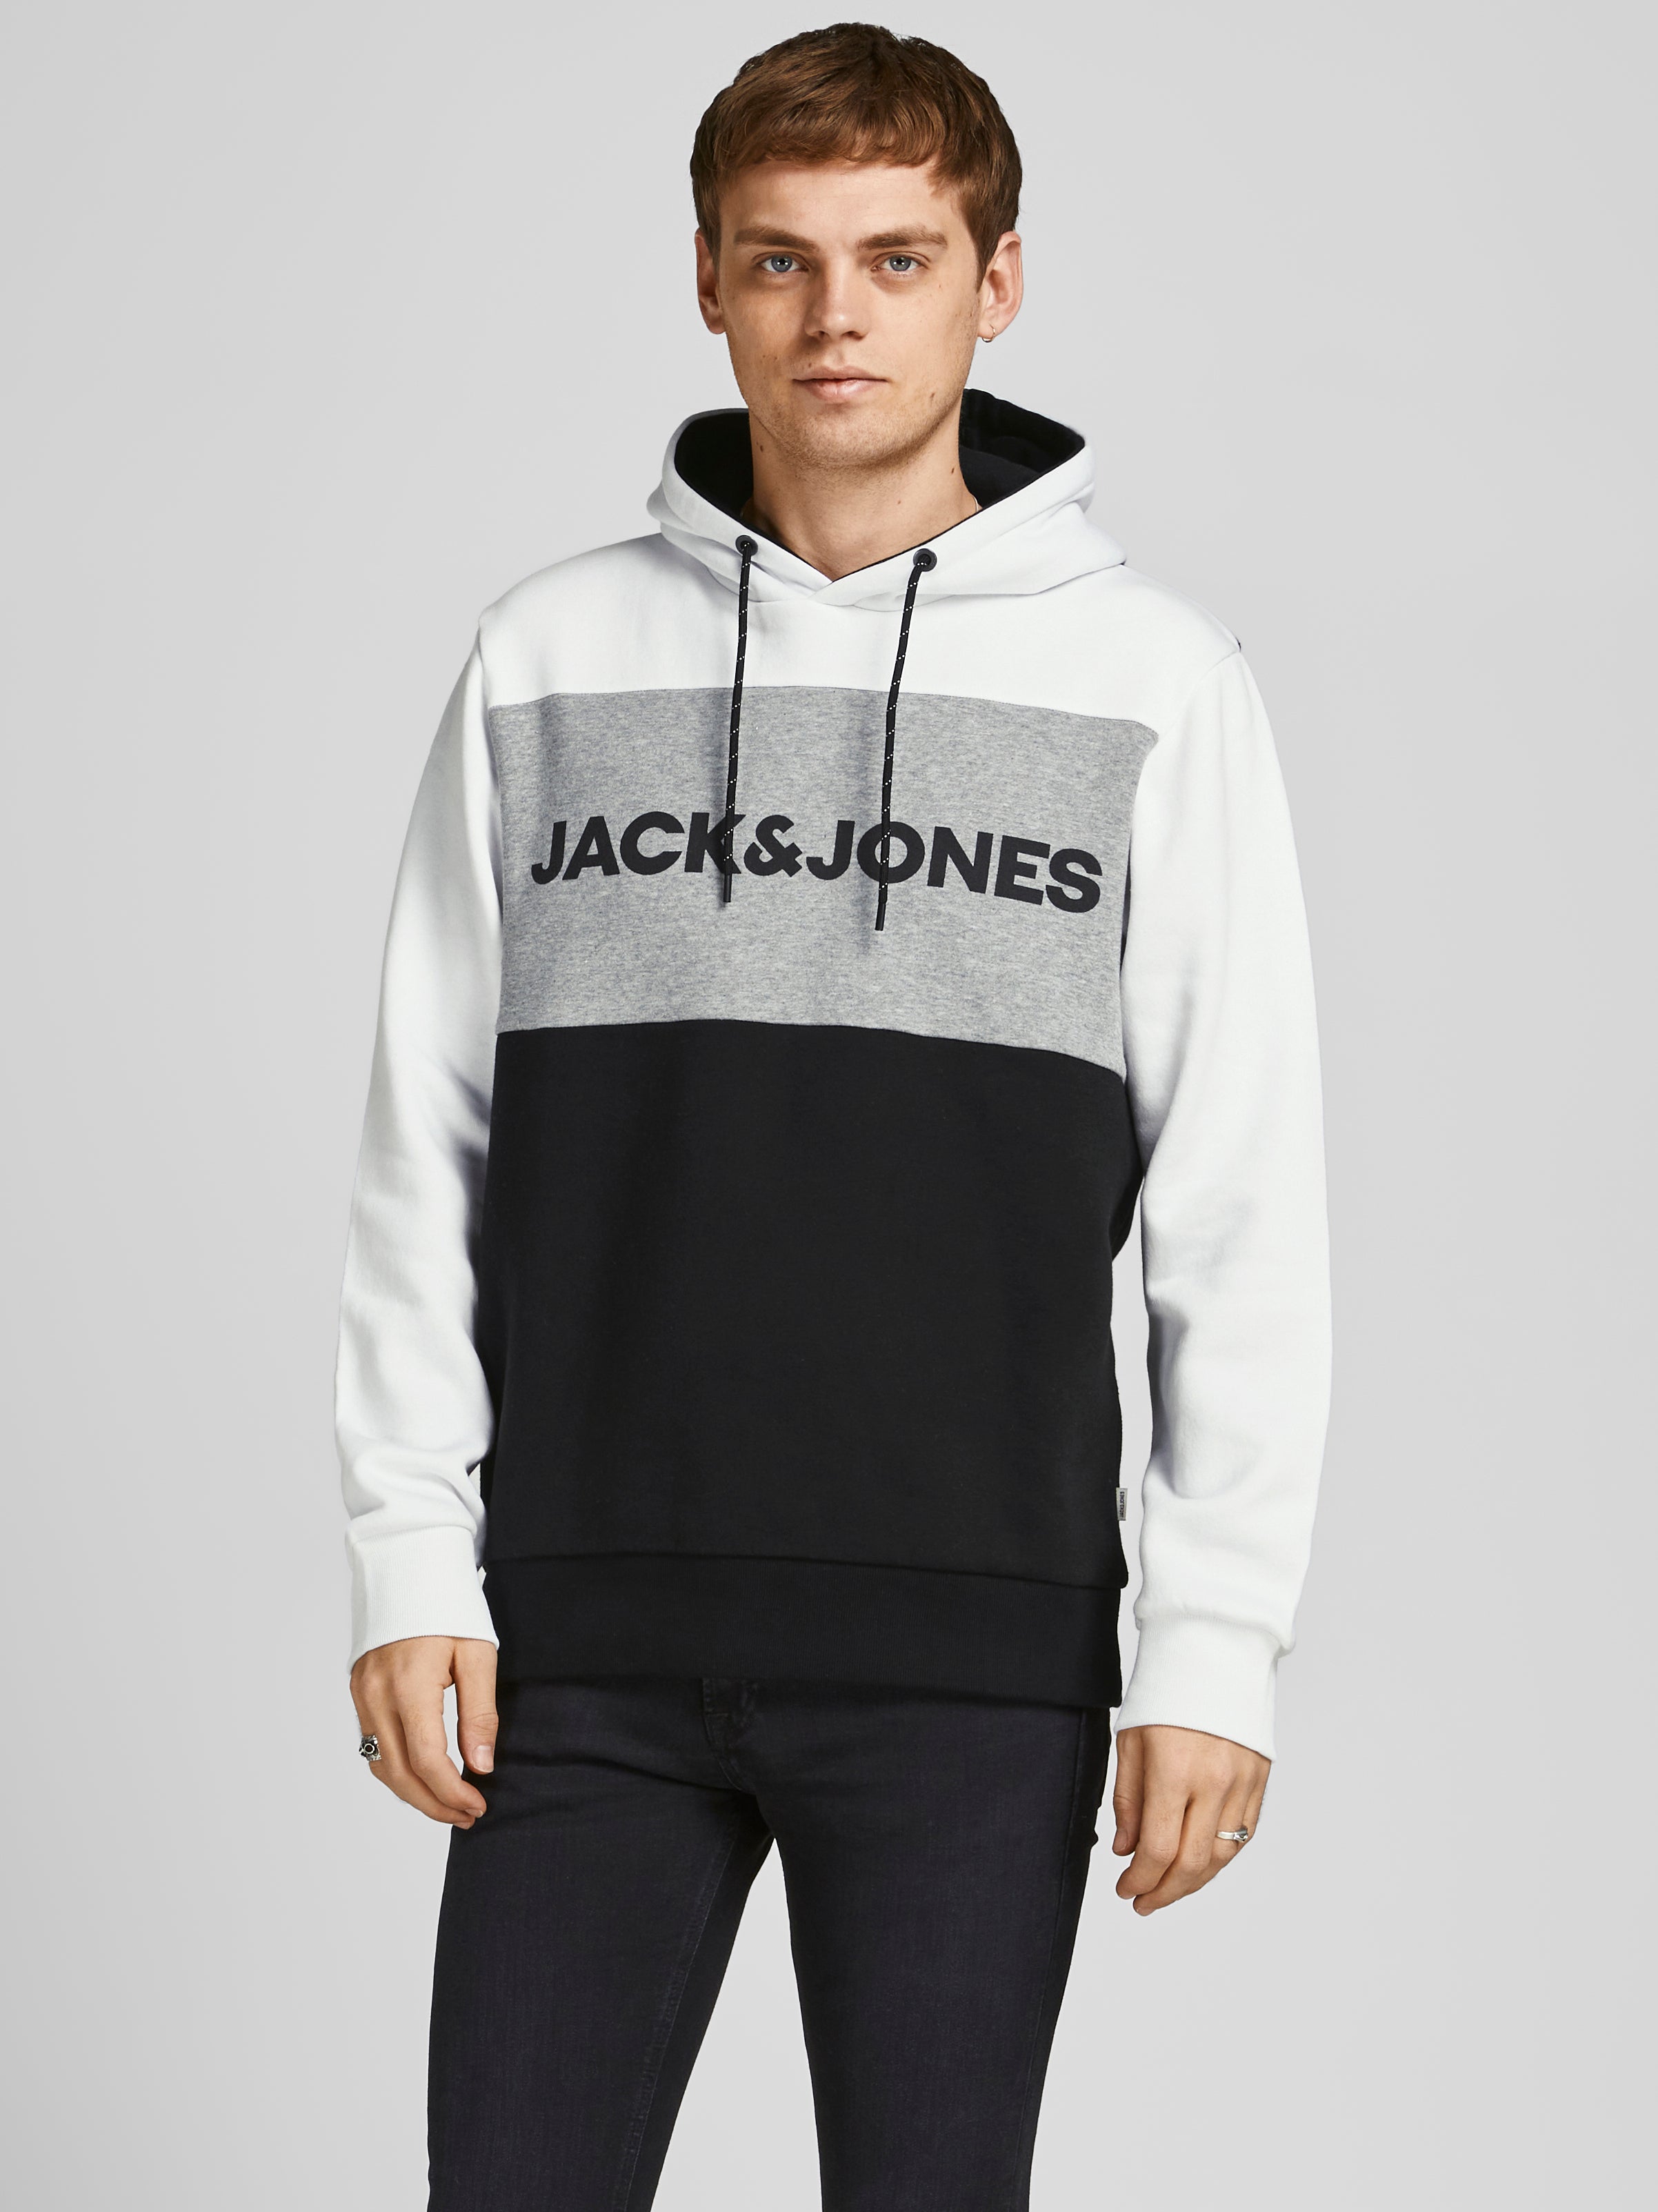 discount 56% MEN FASHION Jumpers & Sweatshirts Sports White L Jack & Jones sweatshirt 